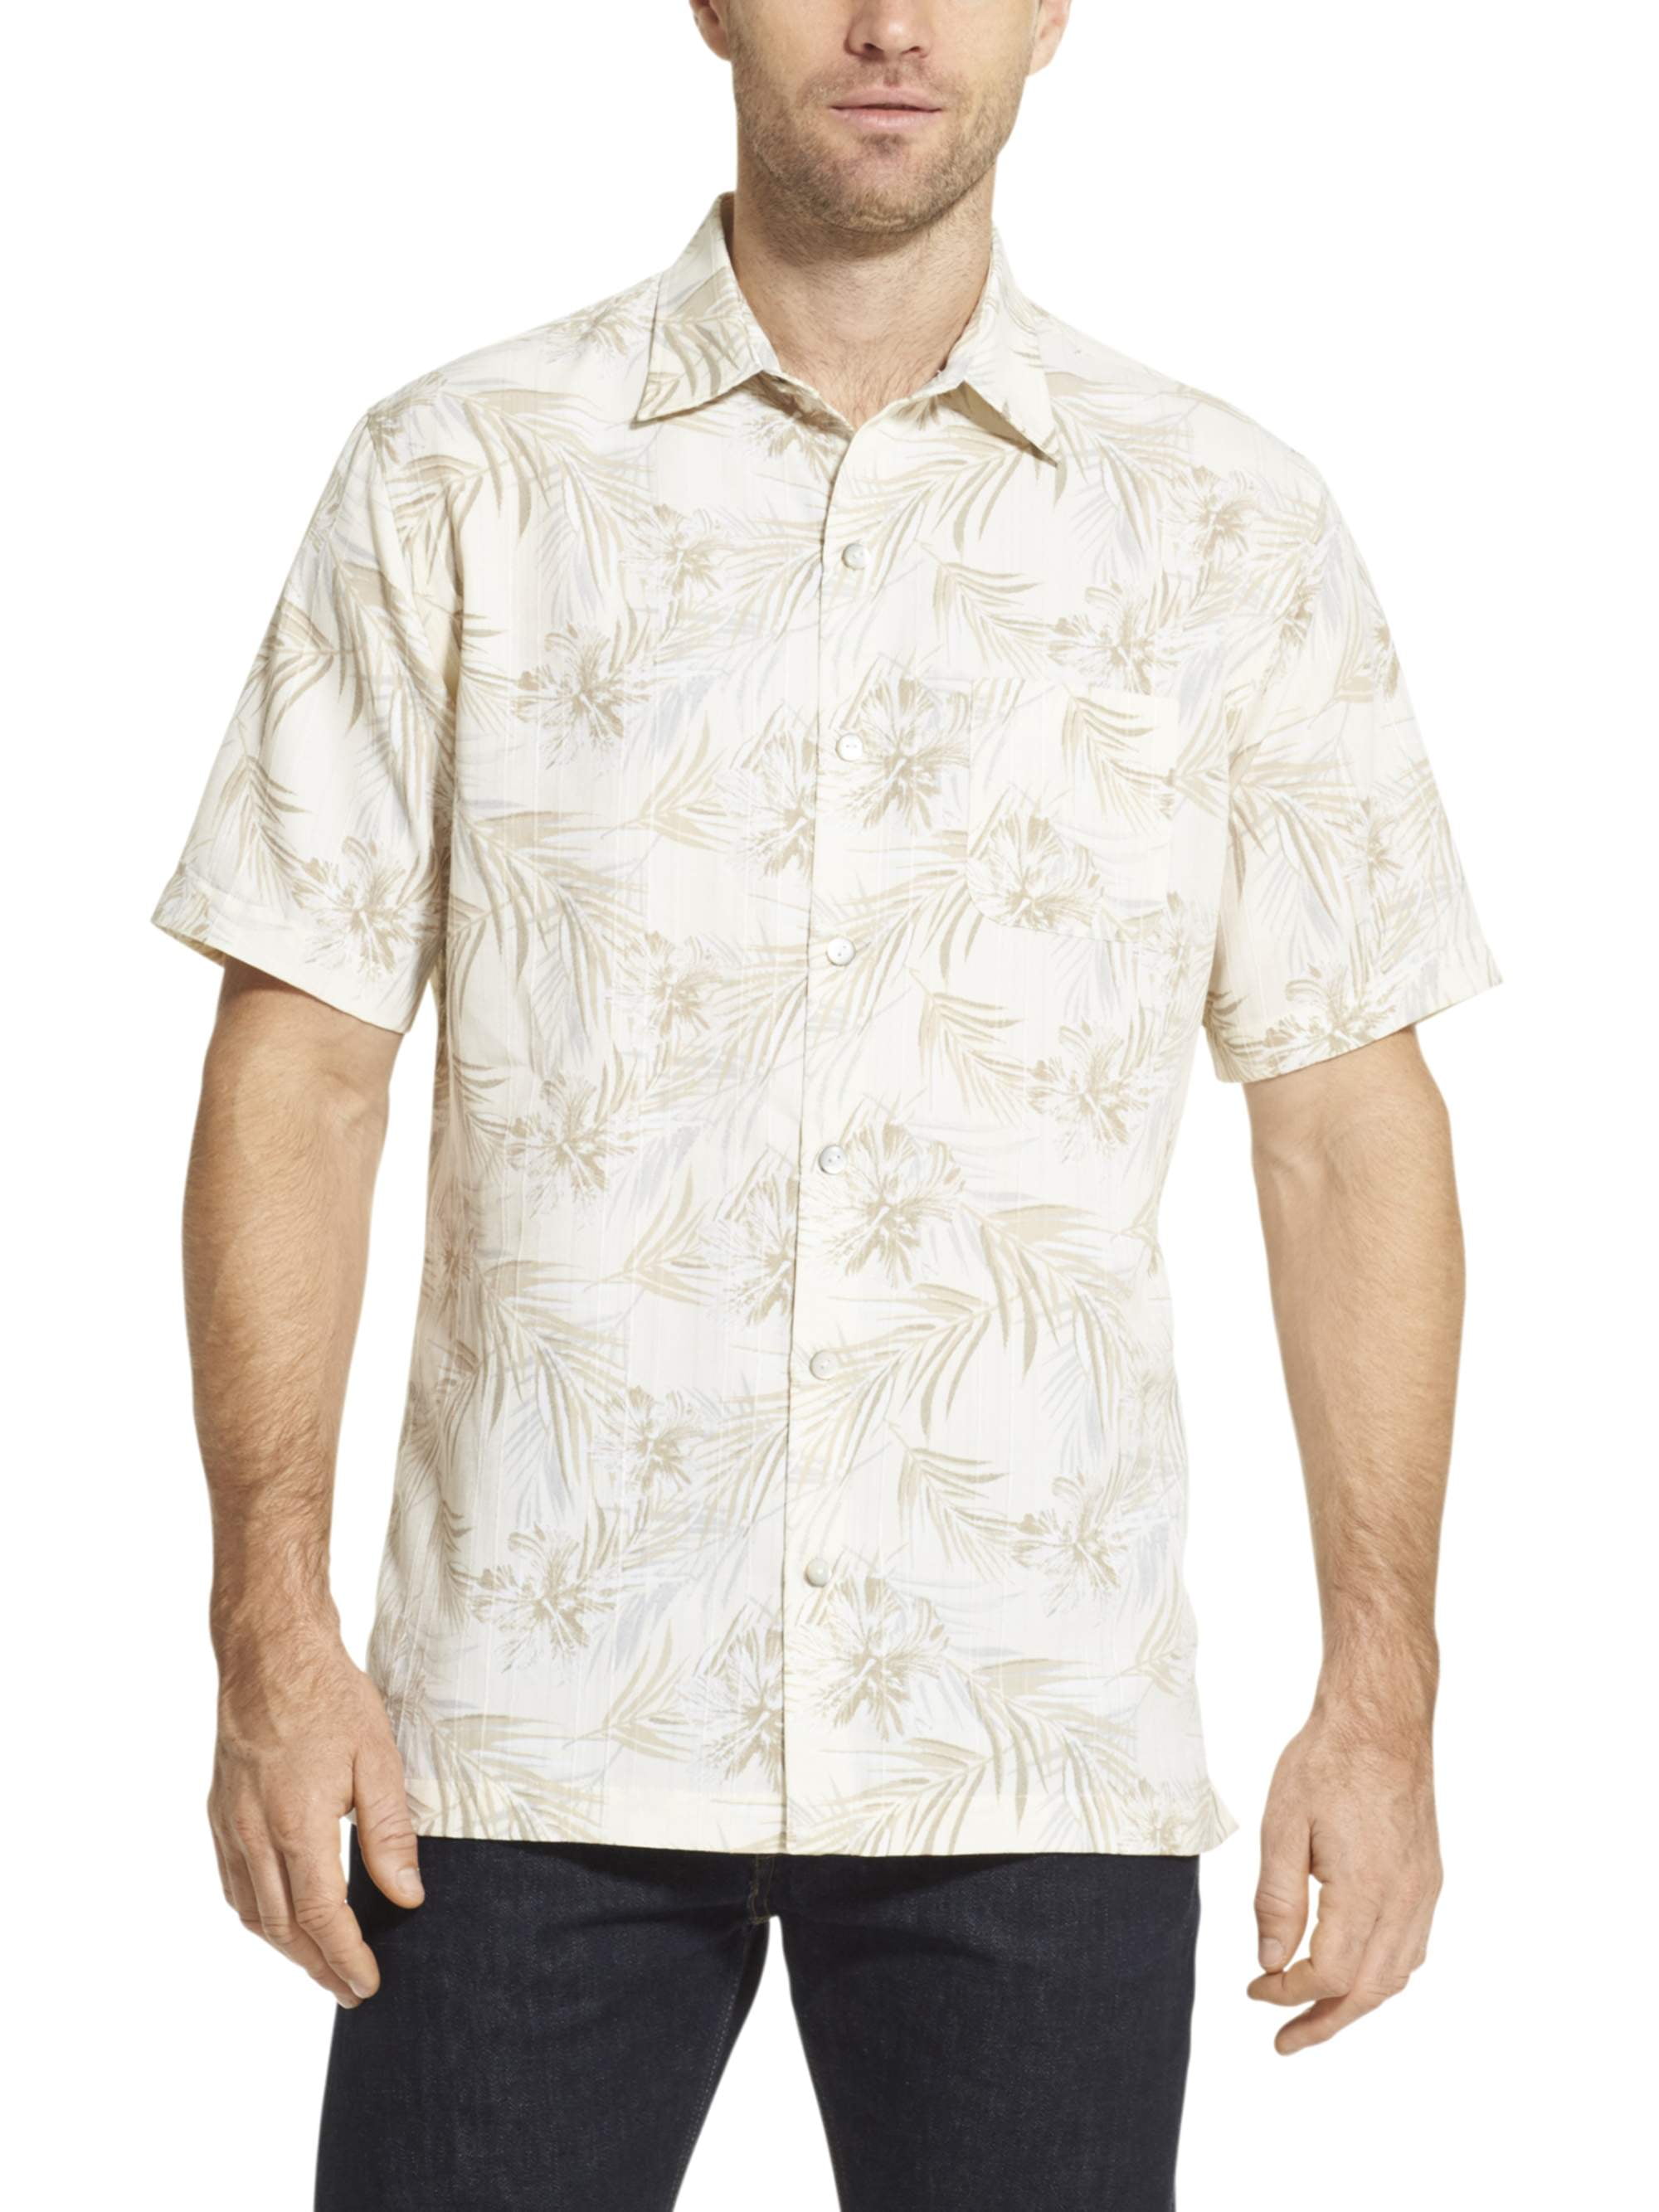 Van Heusen Men's Air Tropical Print Short Sleeve Button Down Shirt 